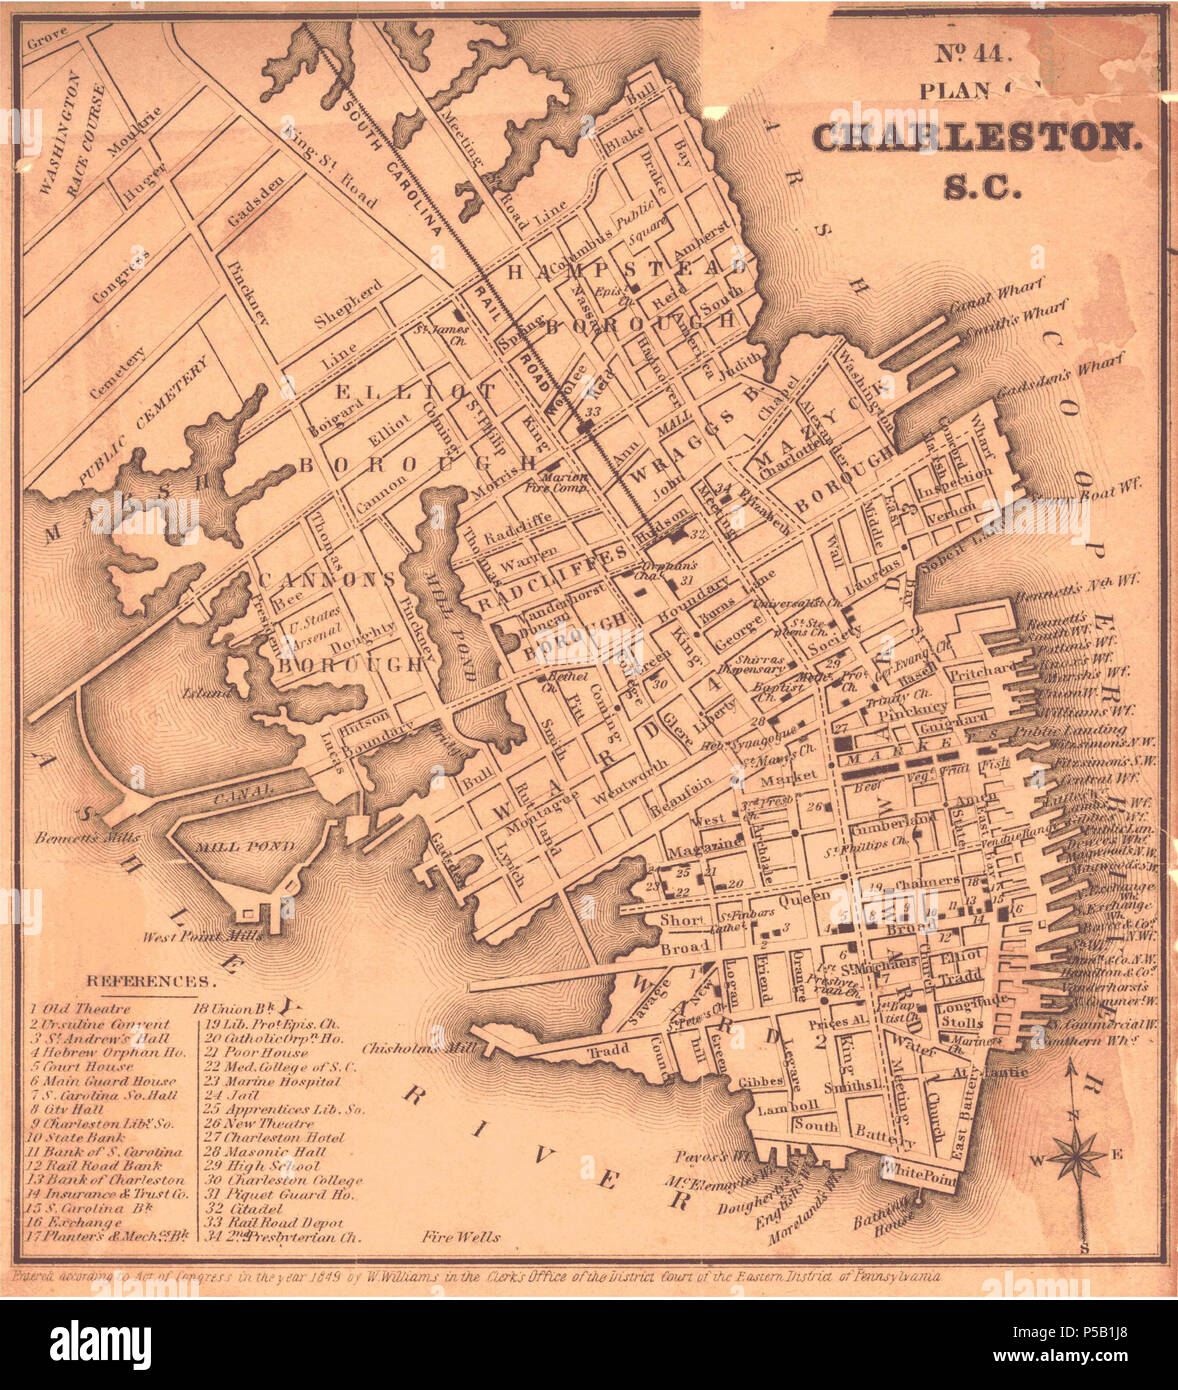 Map Of Historic Downtown Charleston South Carolina Southeast Quadrant Major Tourist Attractions